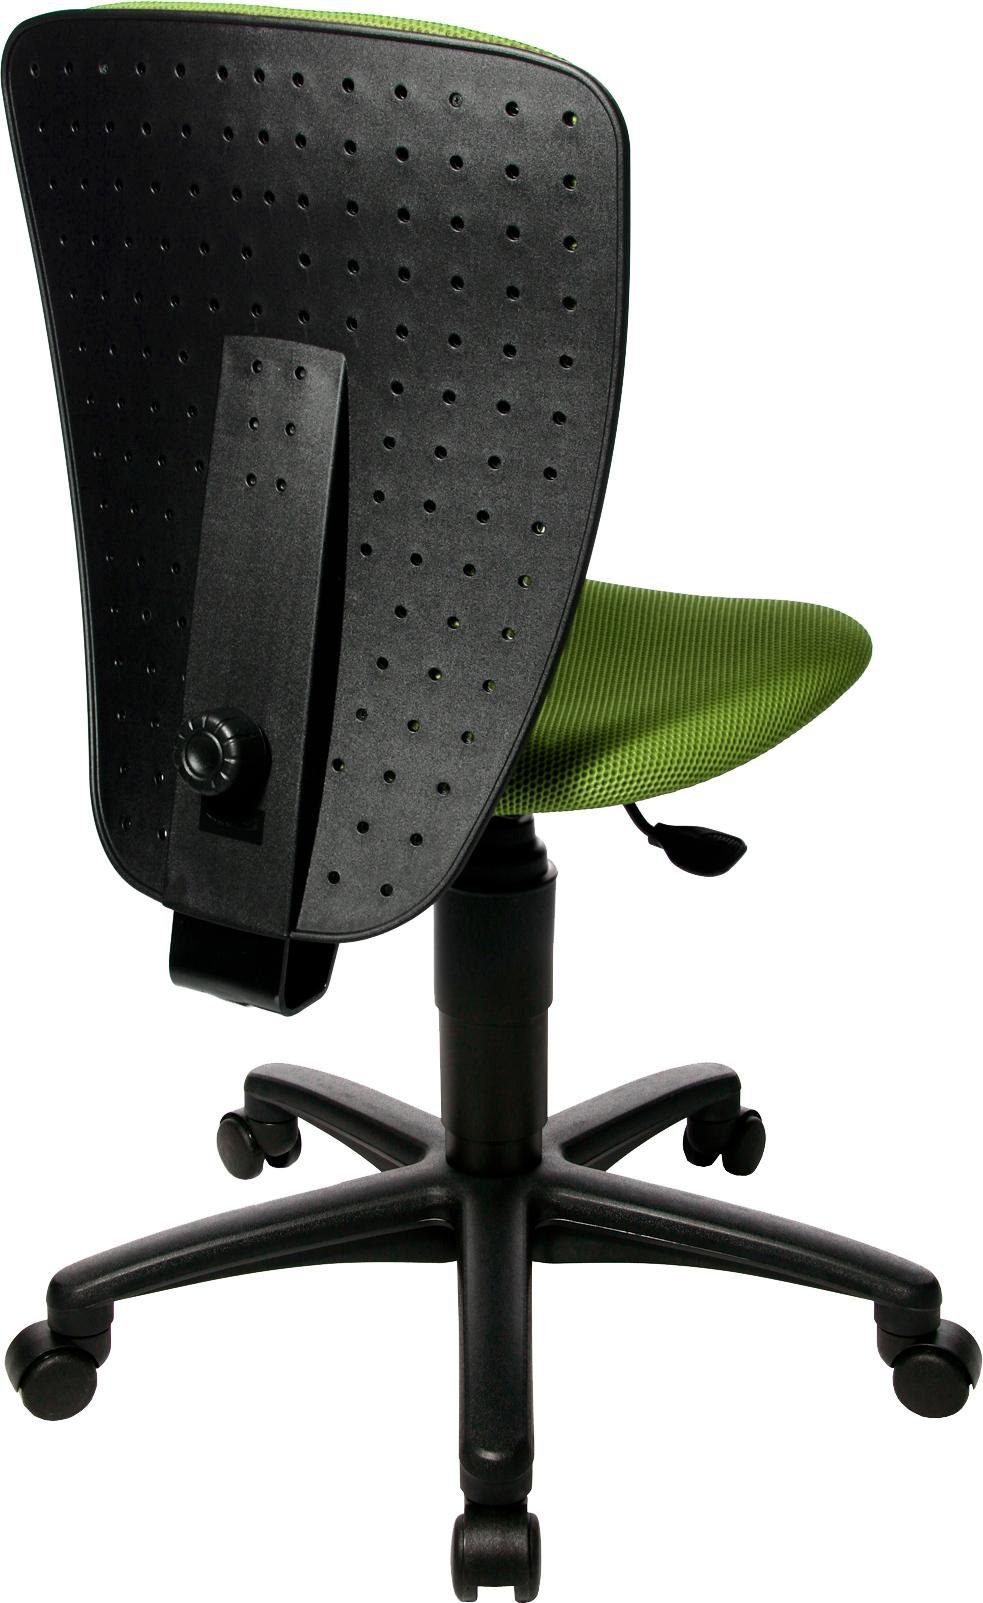 S'cool TOPSTAR Bürostuhl grün-schwarz High